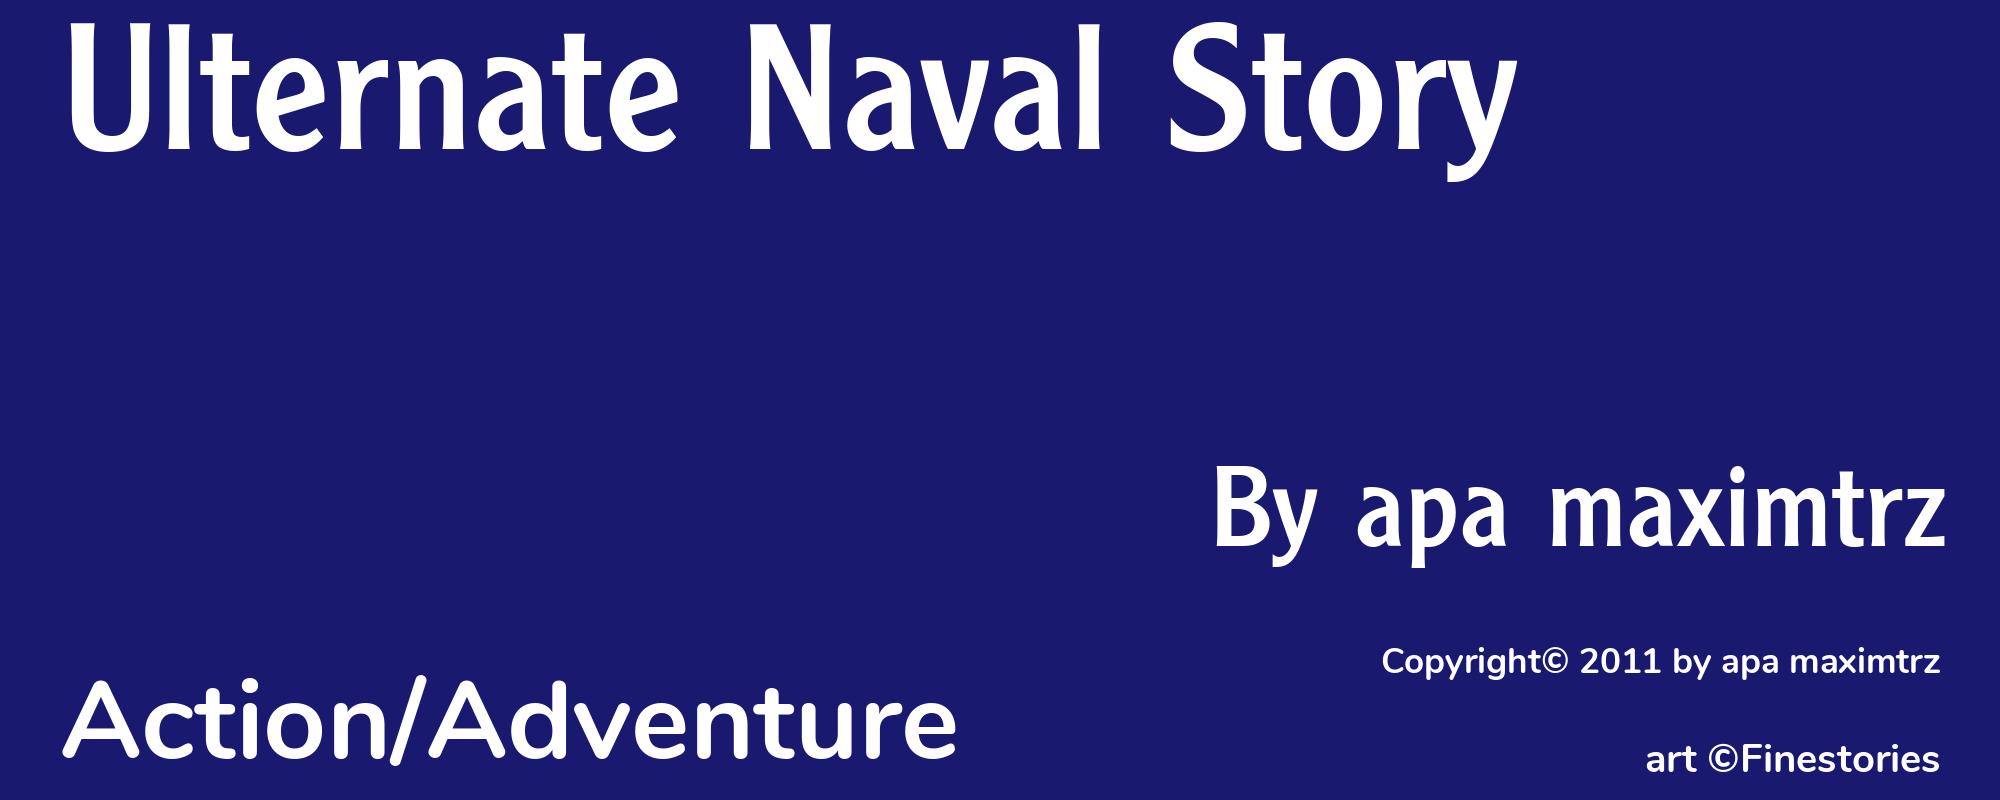 Ulternate Naval Story - Cover